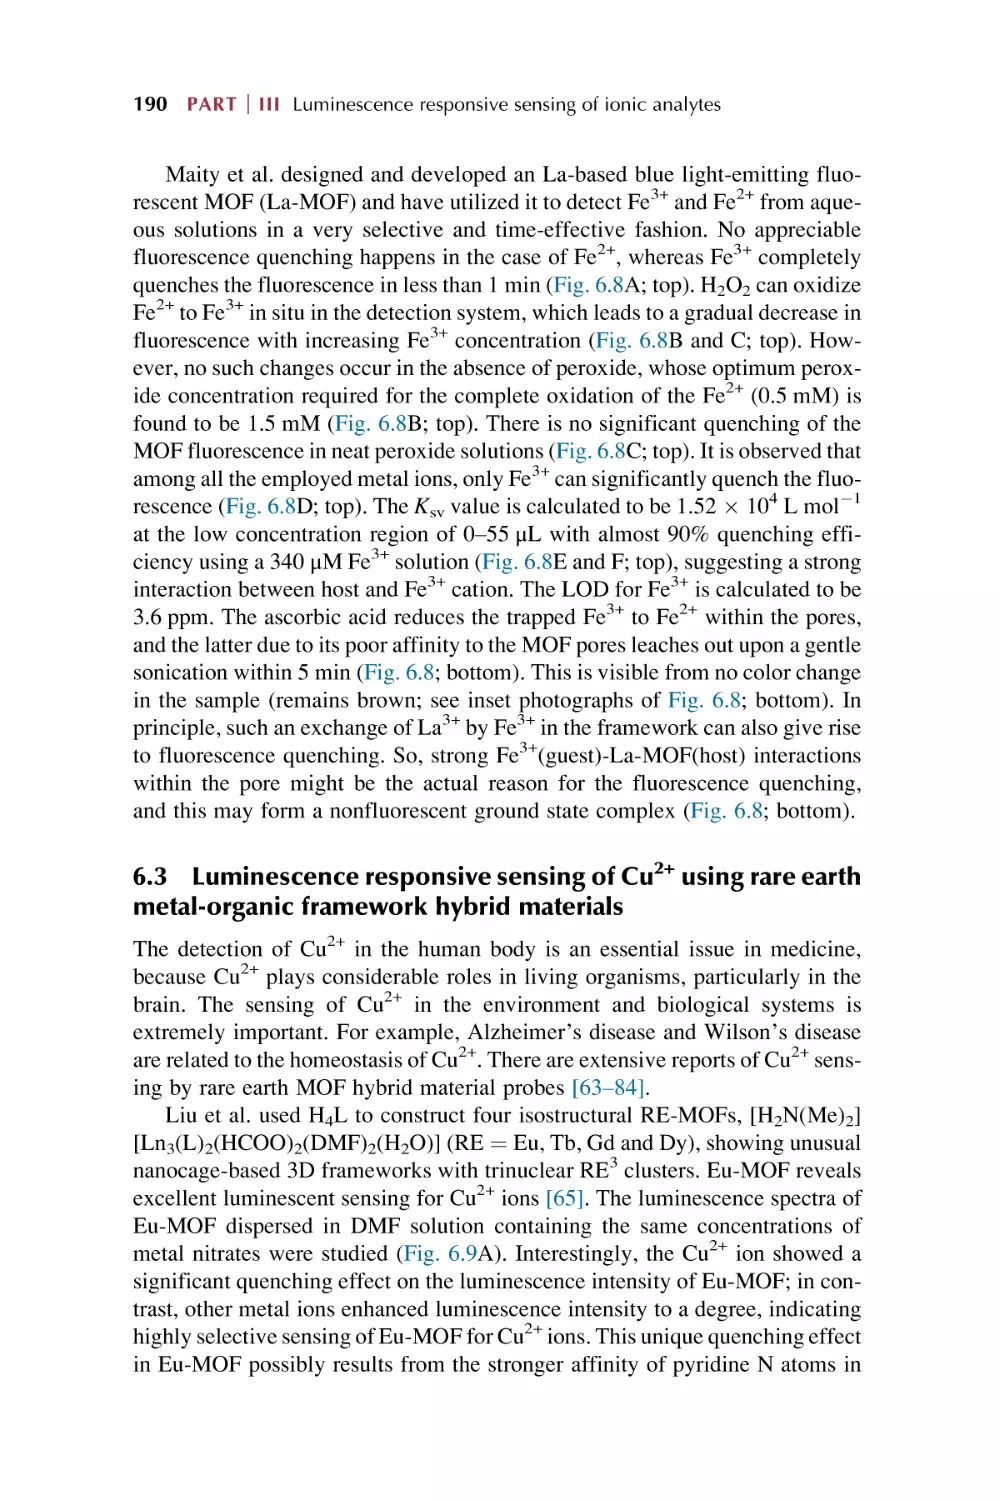 6.3. Luminescence responsive sensing of Cu2+ using rare earth metal-organic framework hybrid materials